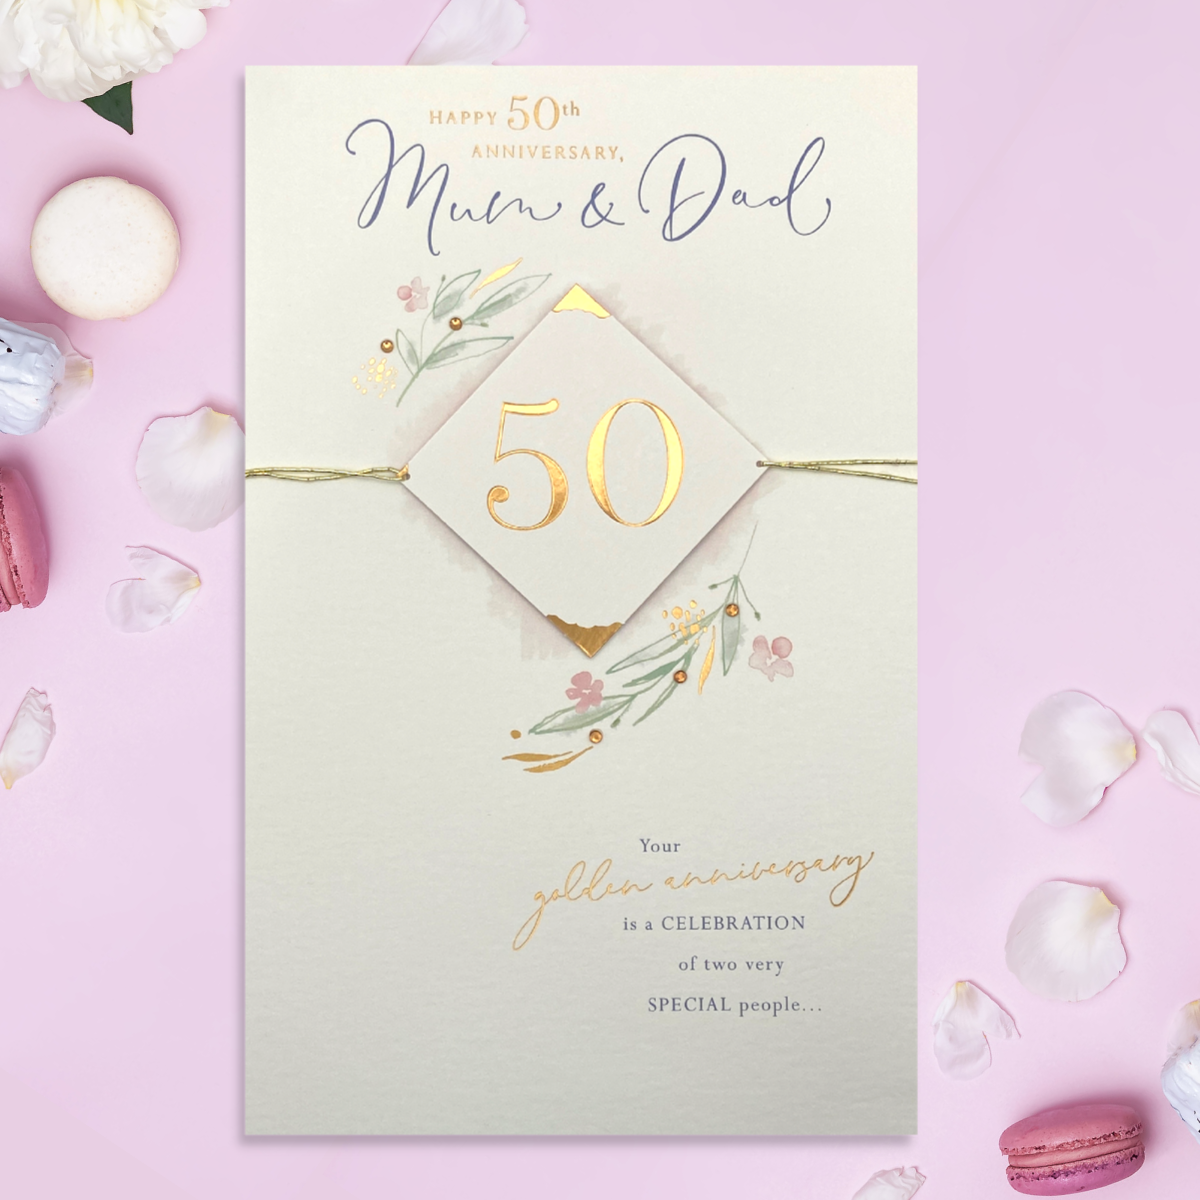 Mum & Dad Golden Wedding Anniversary Card - 50th Embellished Large